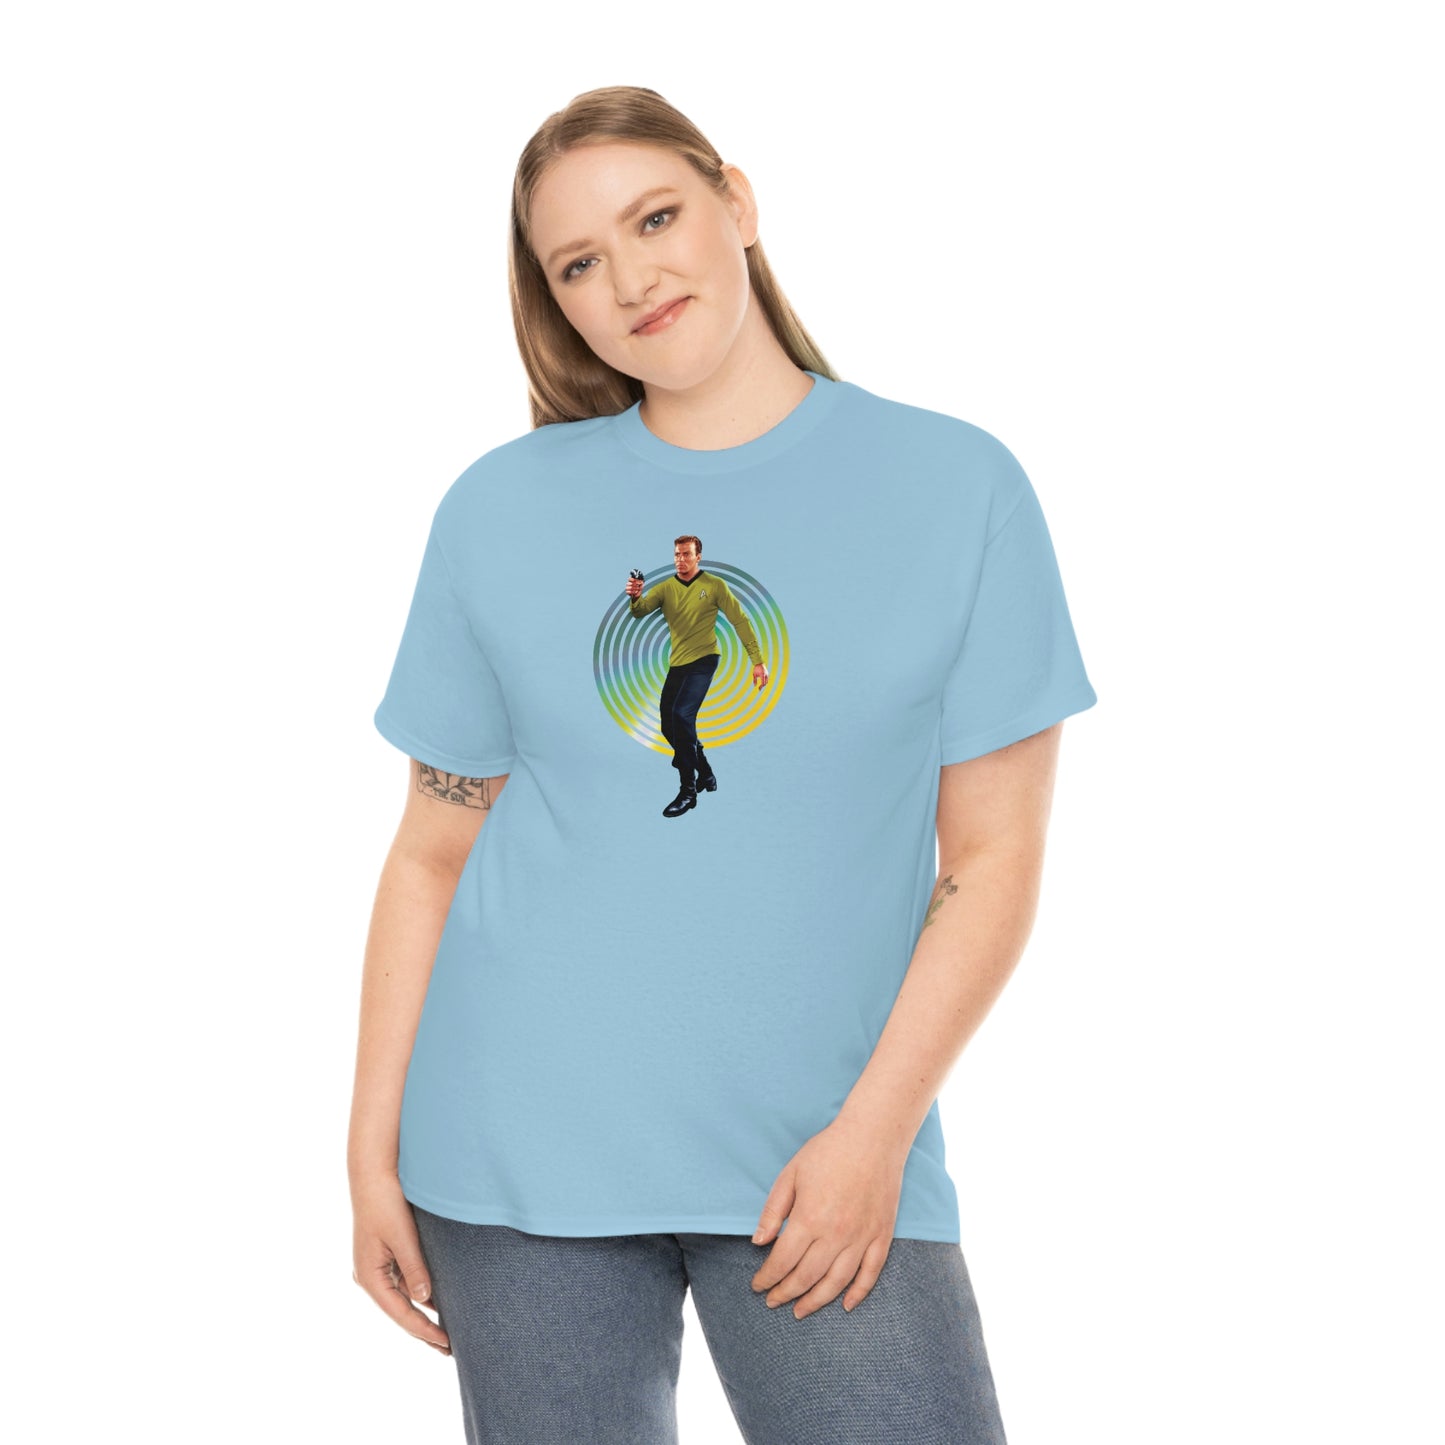 Captain Kirk T-Shirt